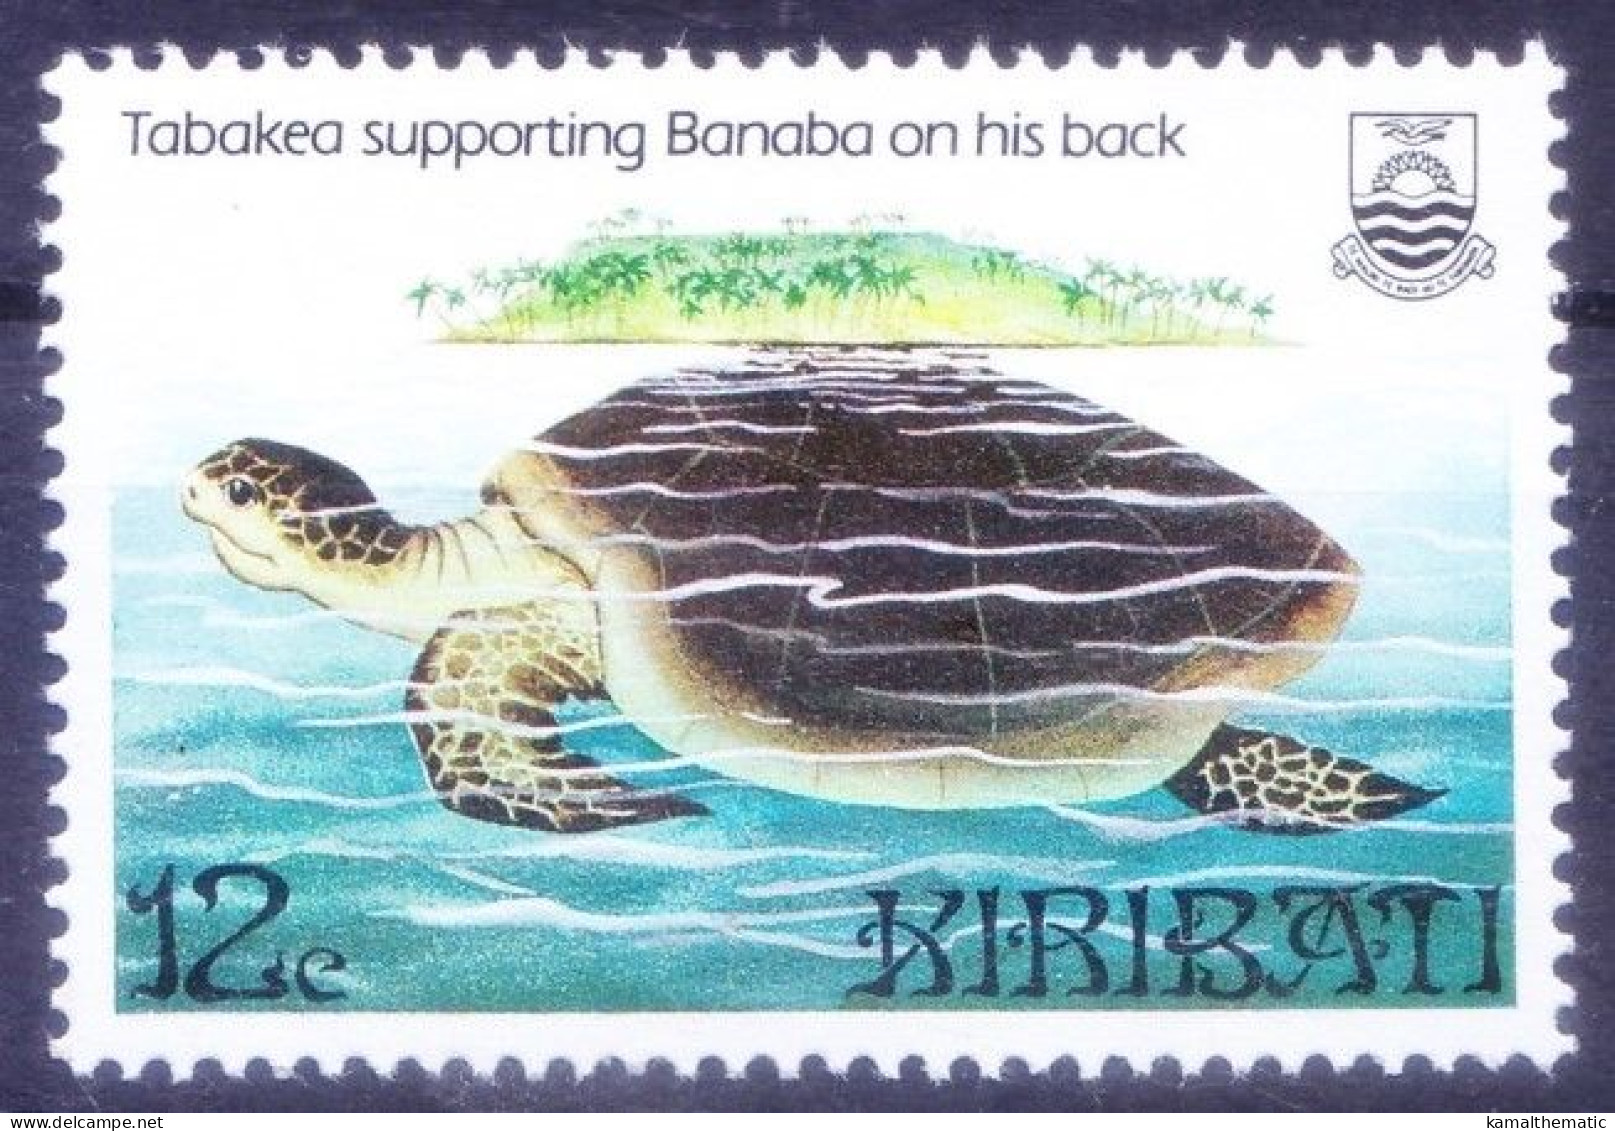 Kiribati 1984 MNH, Tabakea The Turtle God, Supporting Banaba Island On Back. - Schildkröten